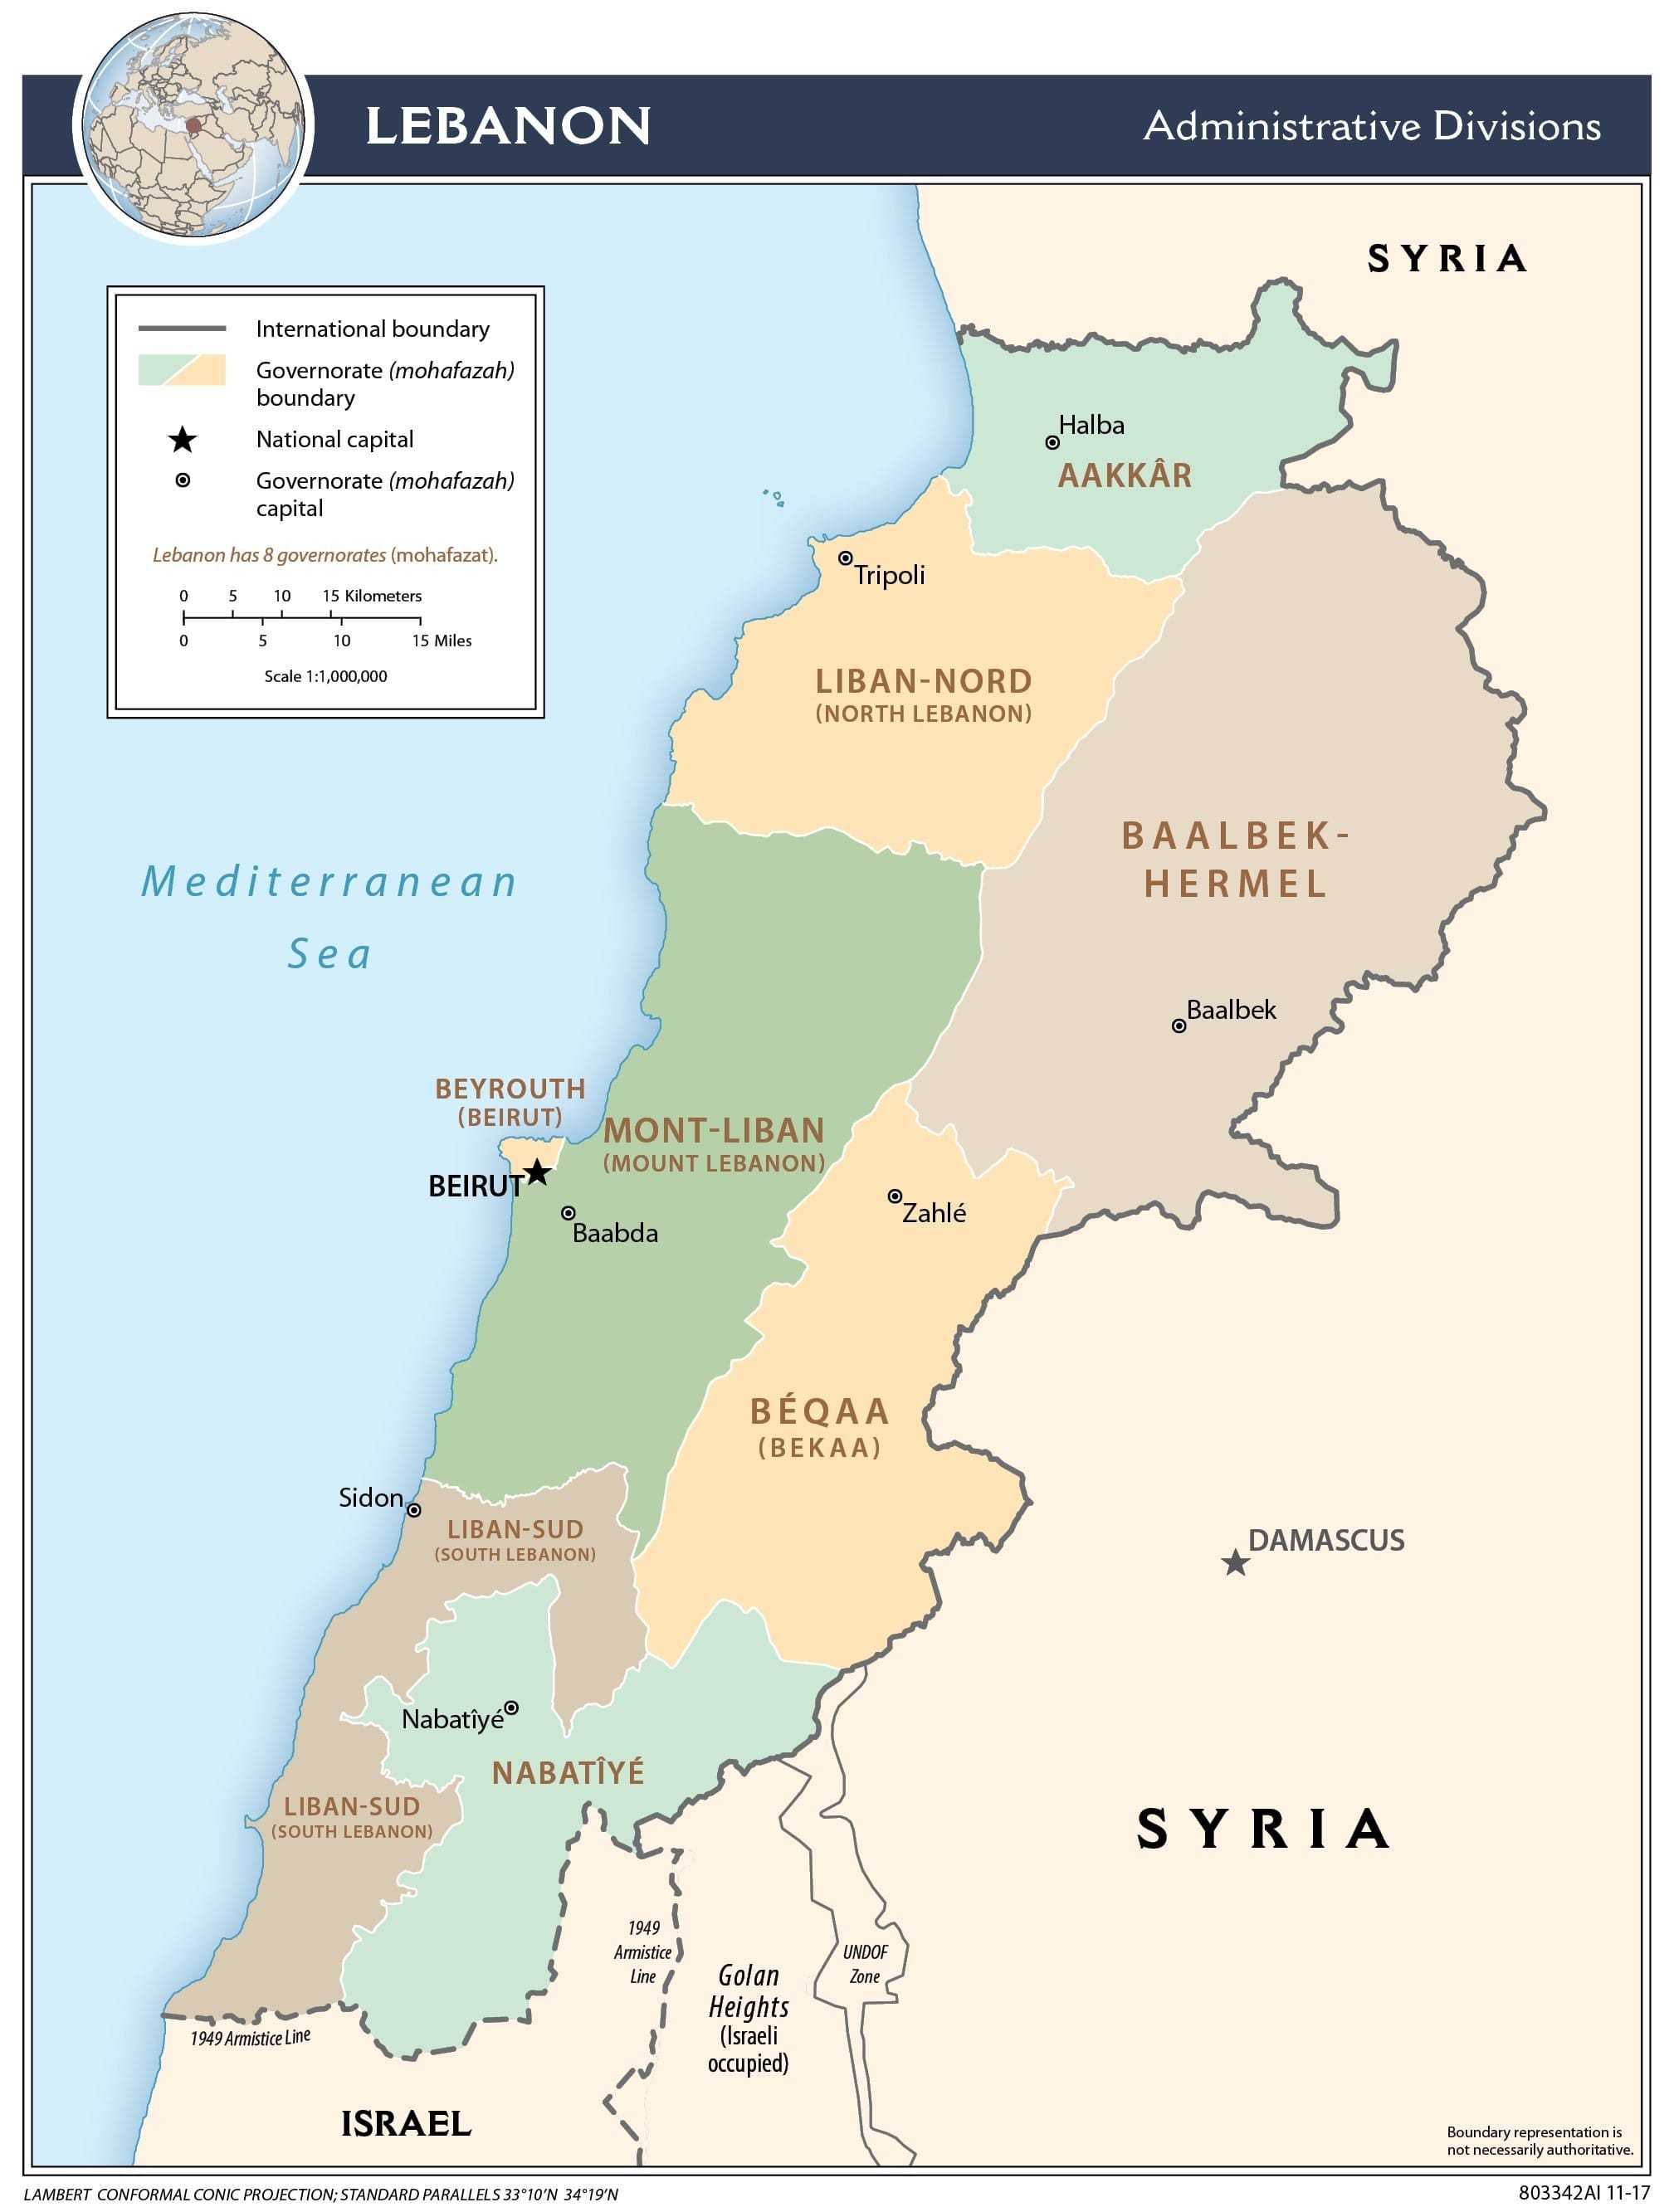 Administrative map of Lebanon.